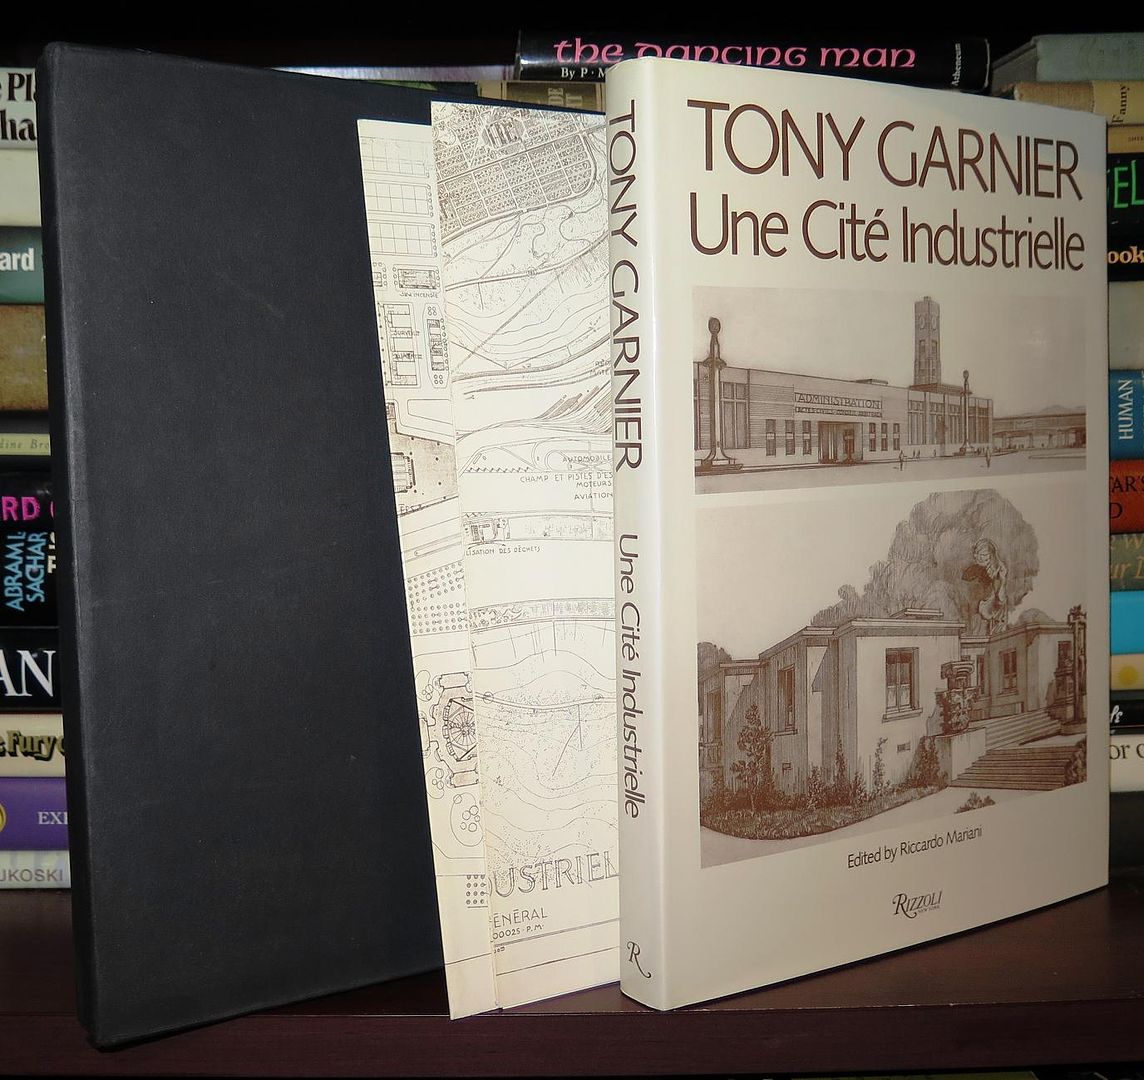 GARNIER, TONY & RICCARDO MARIANI - Tony Garnier Une Cite Industrielle